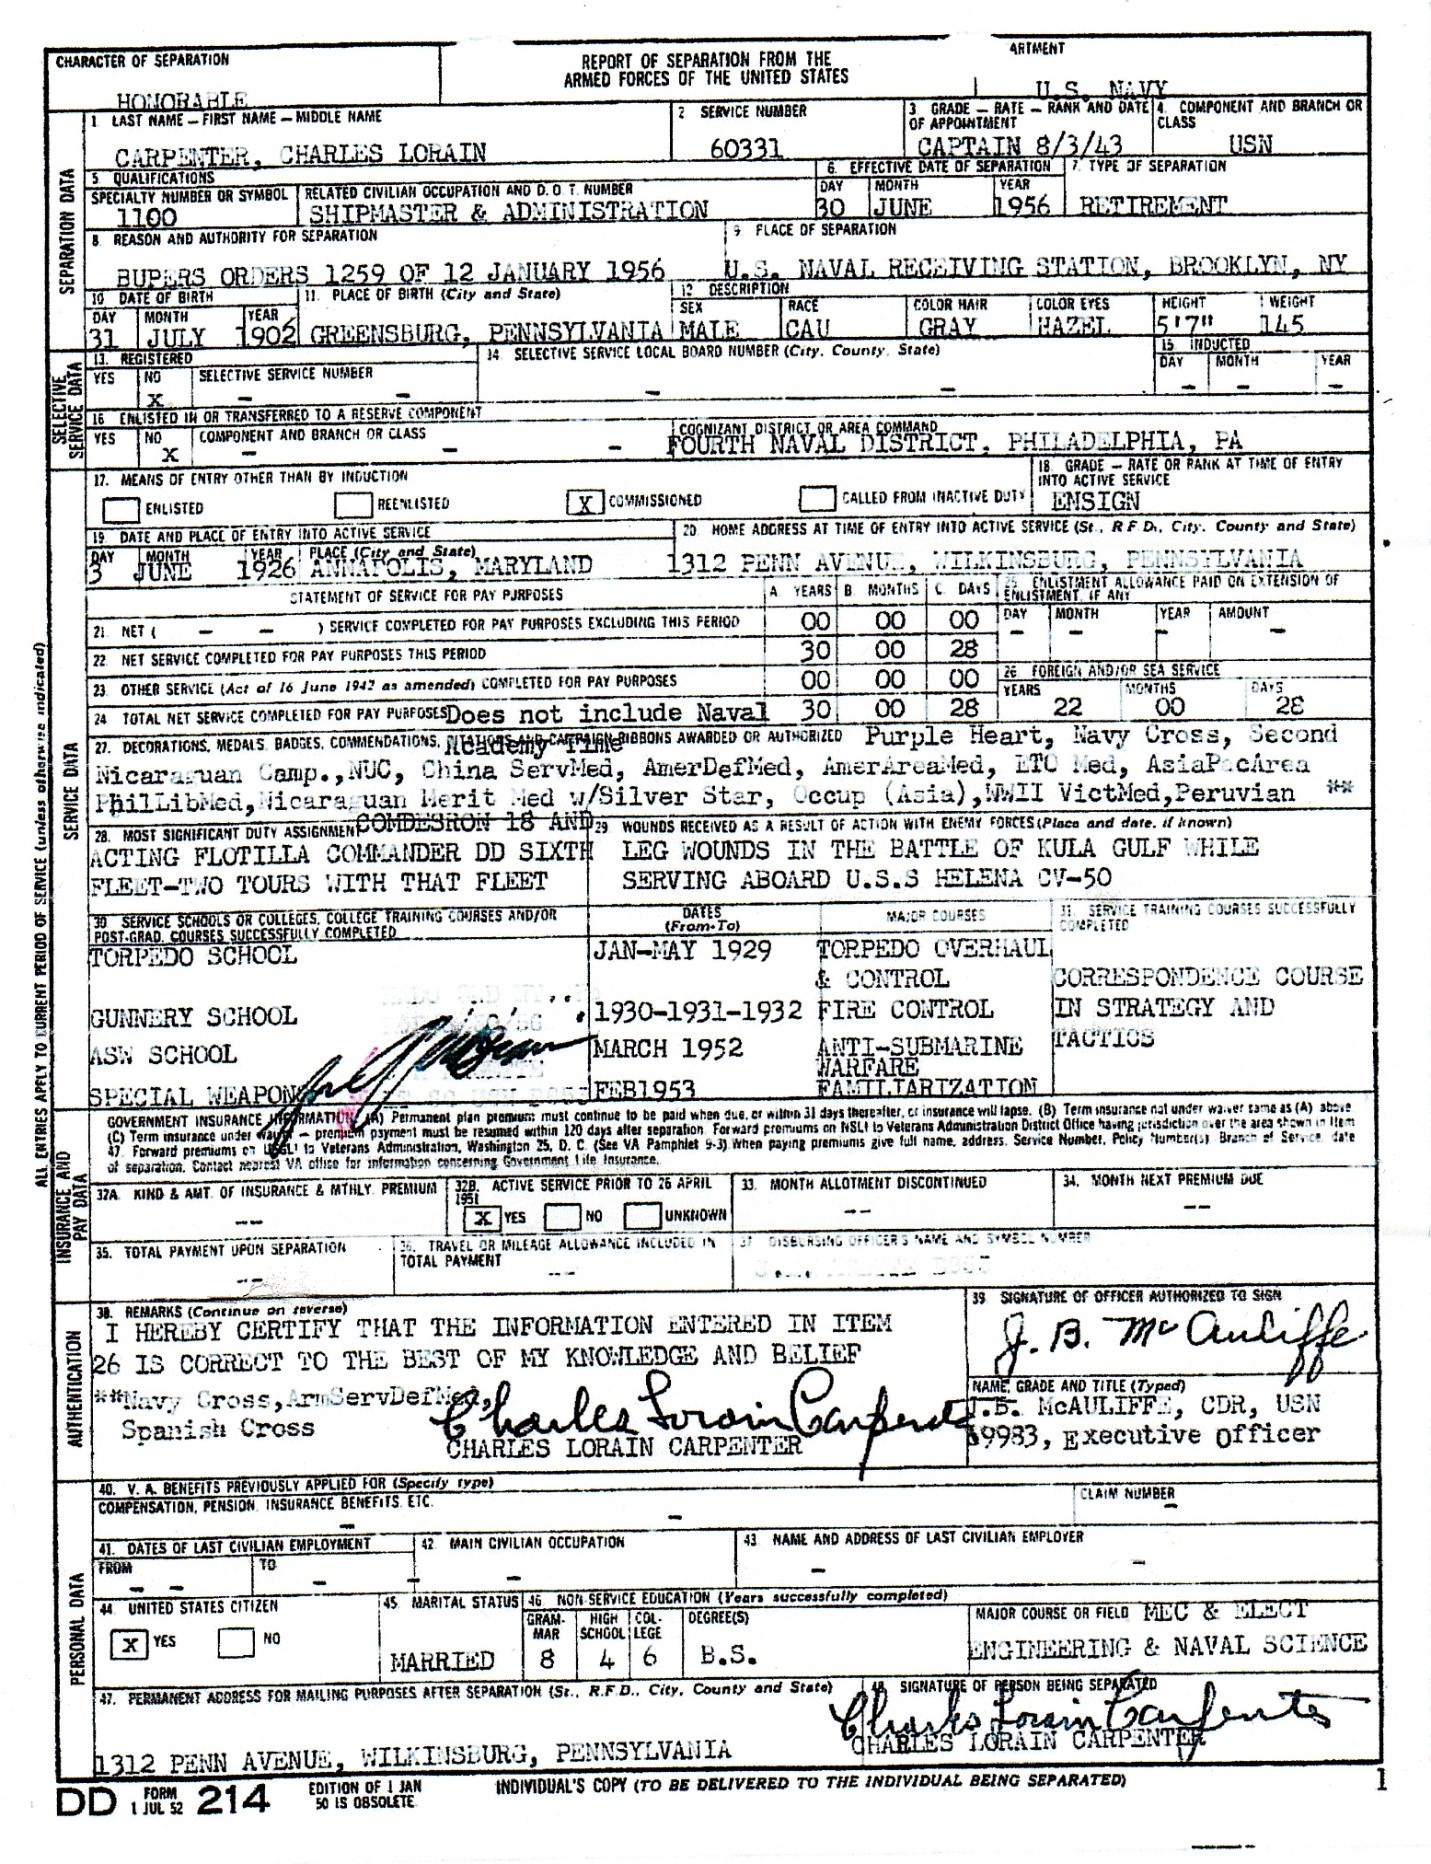 World War 2 by popular US online genealogists, Price Genealogy: image of a gunnery school certificate. 